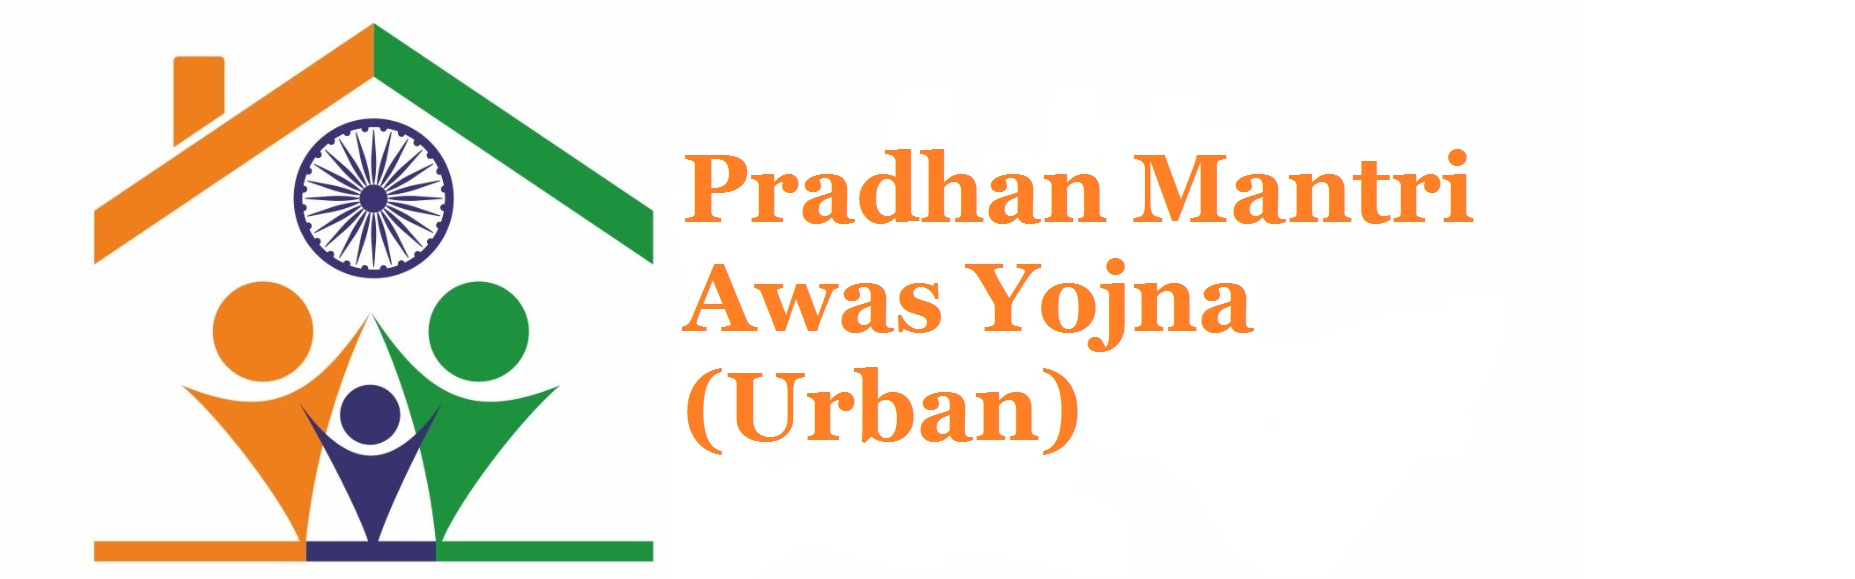 pradhan mantri awas yojana urban : urban (pmay-u)